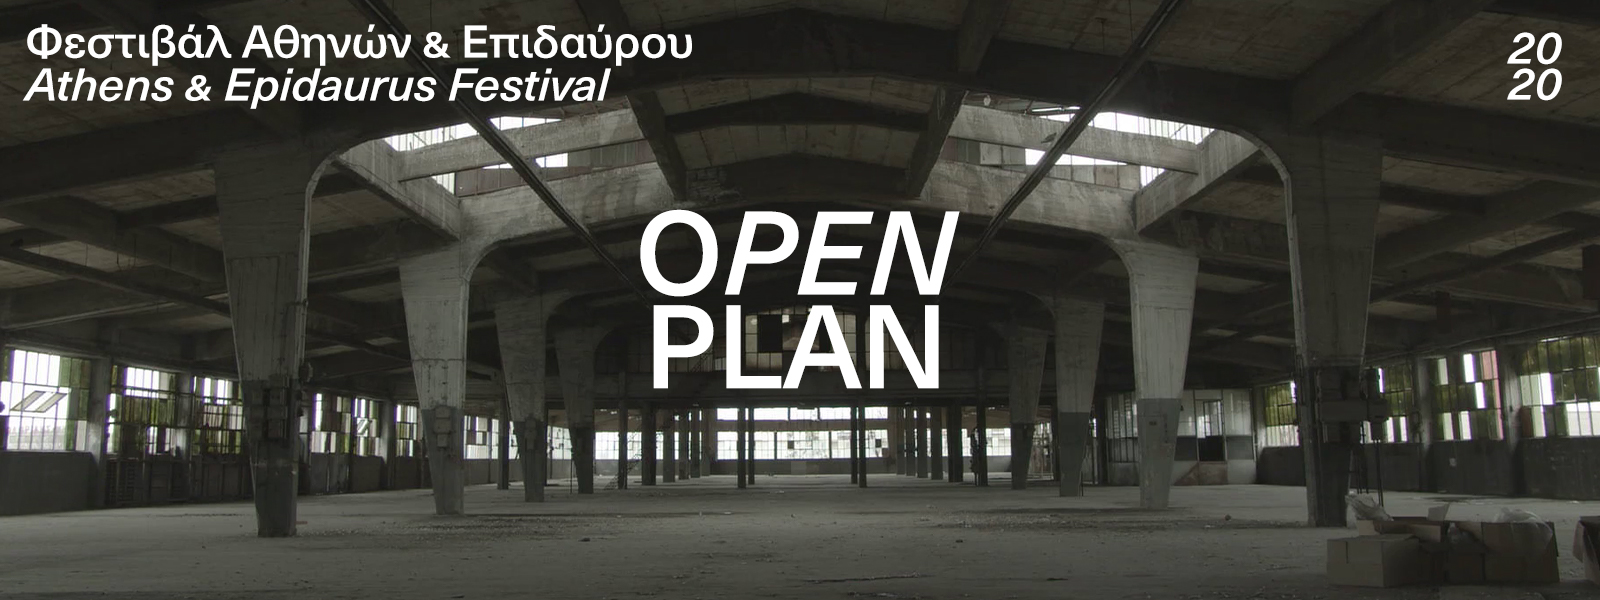 Open_plan-1600x600